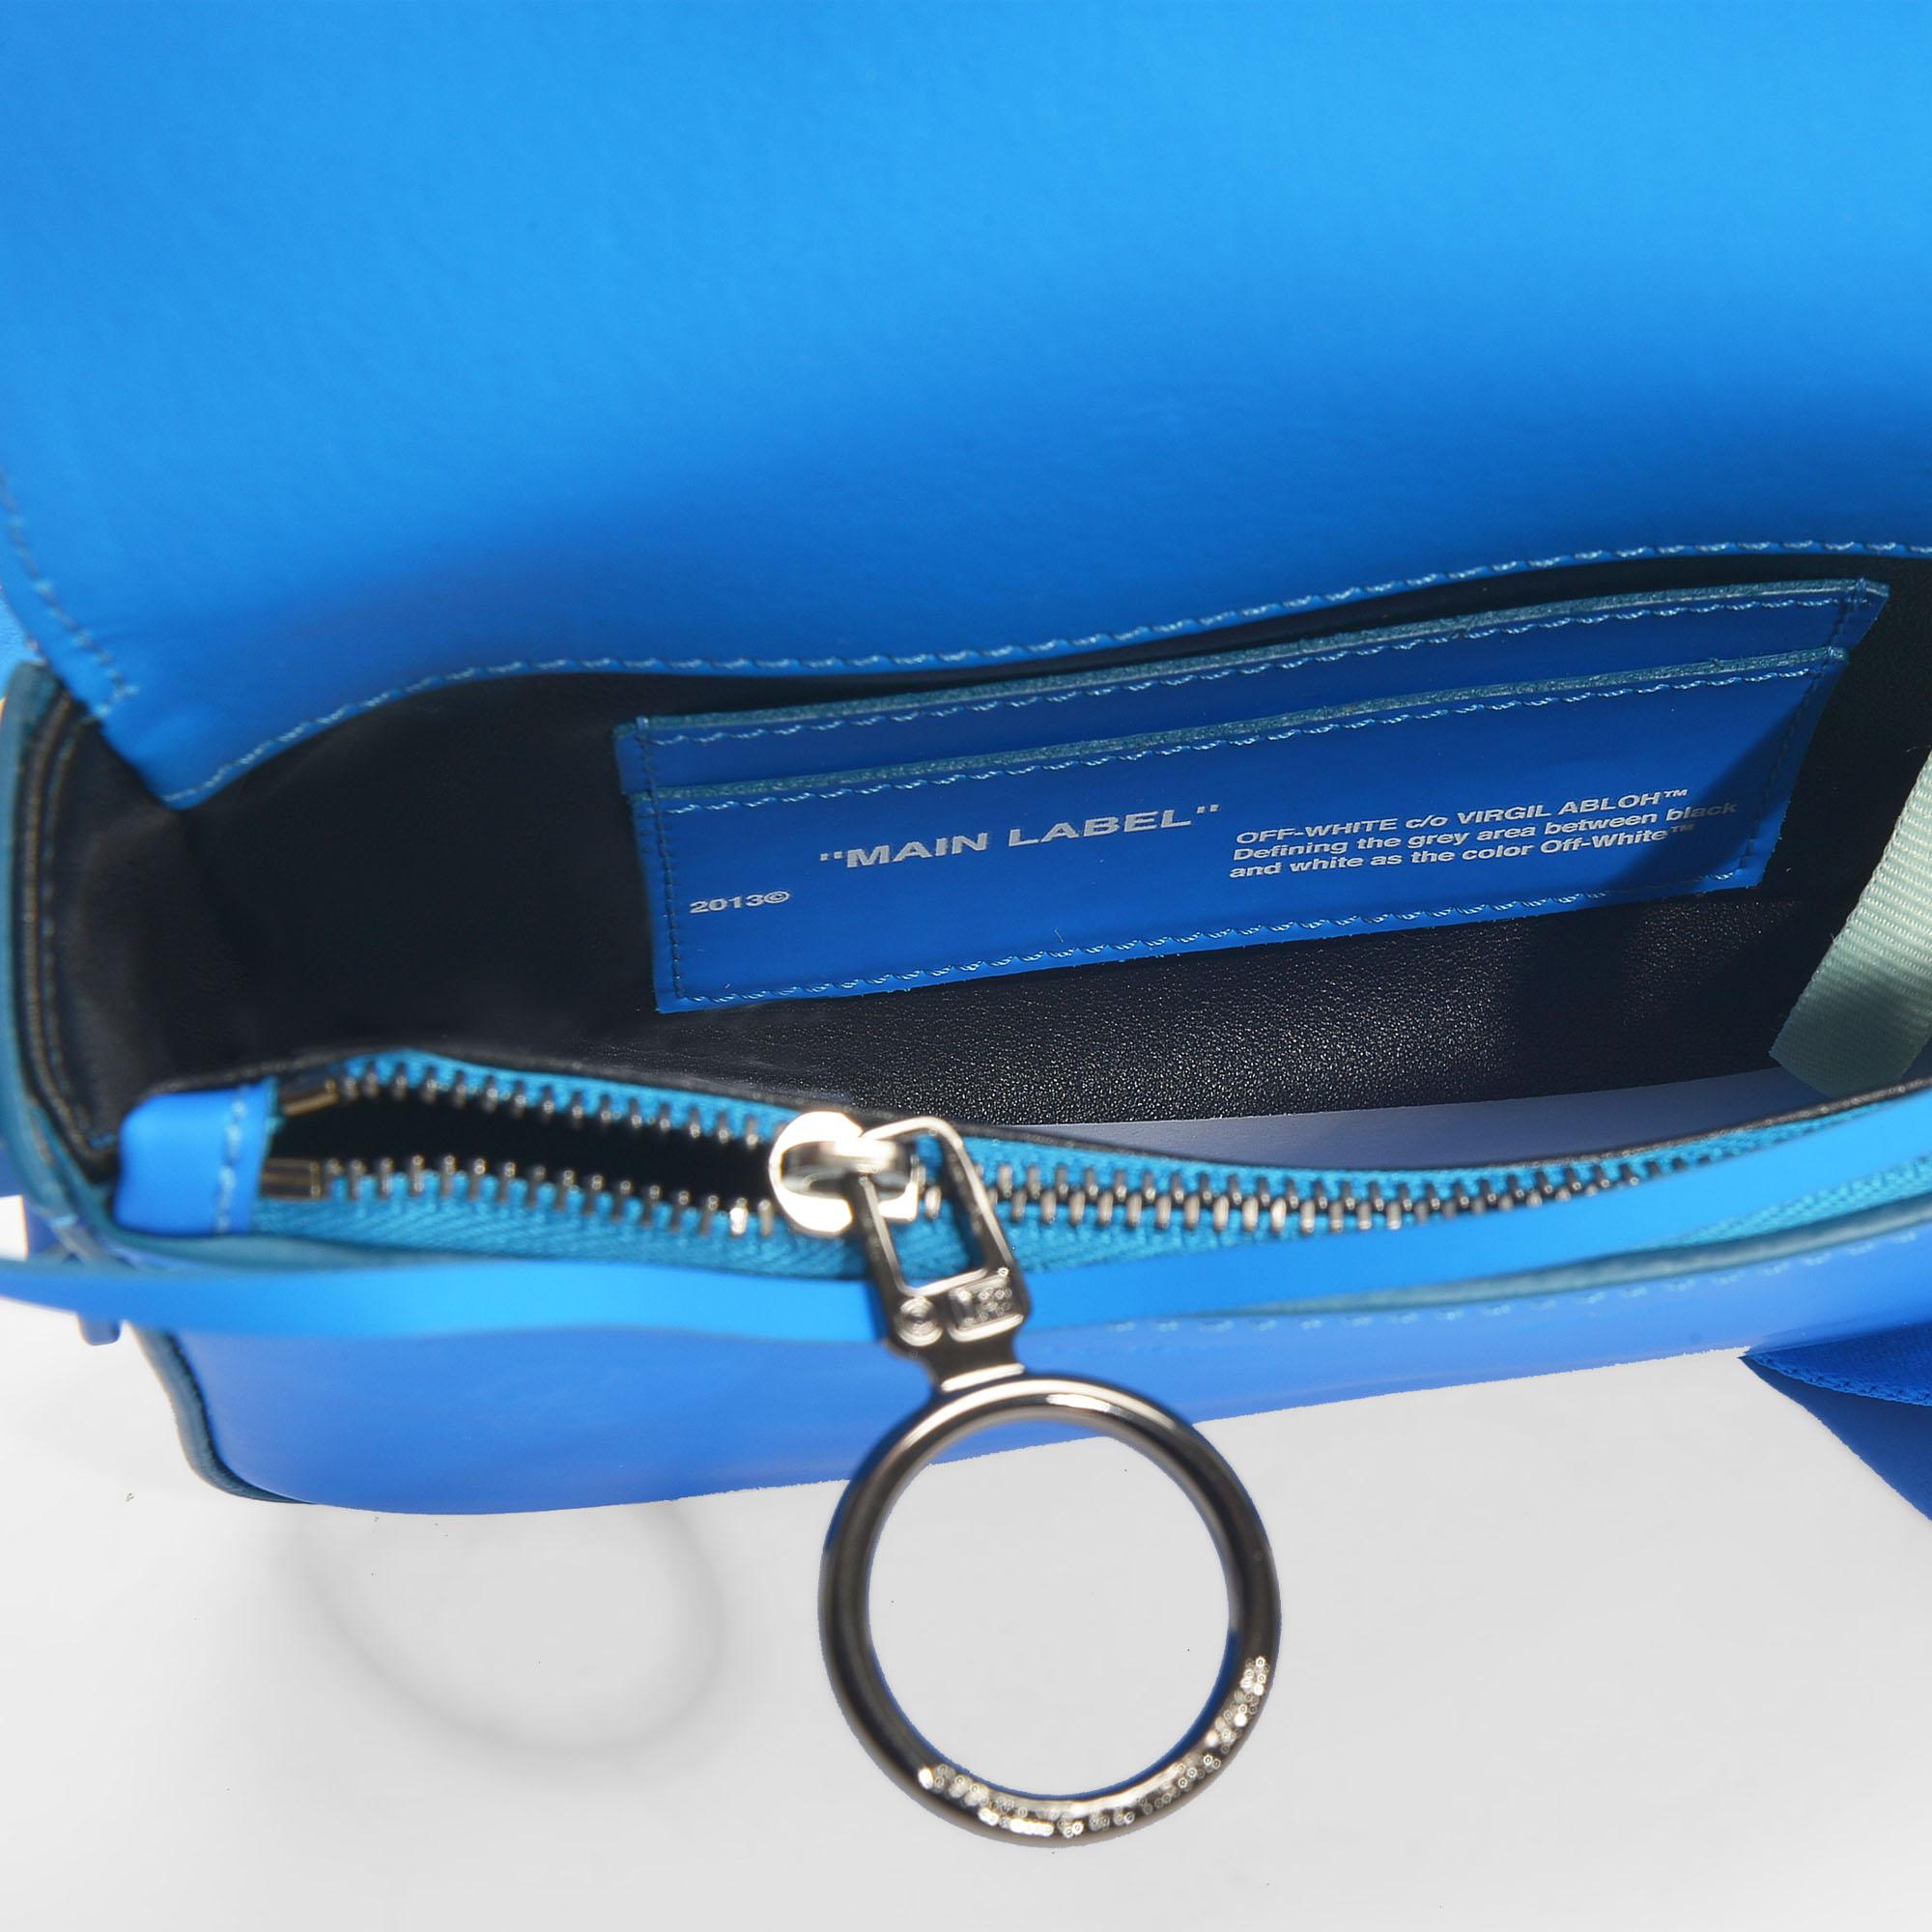 Off-White c/o Virgil Abloh Leather Mini Flap Crossbody Bag in Blue - Lyst